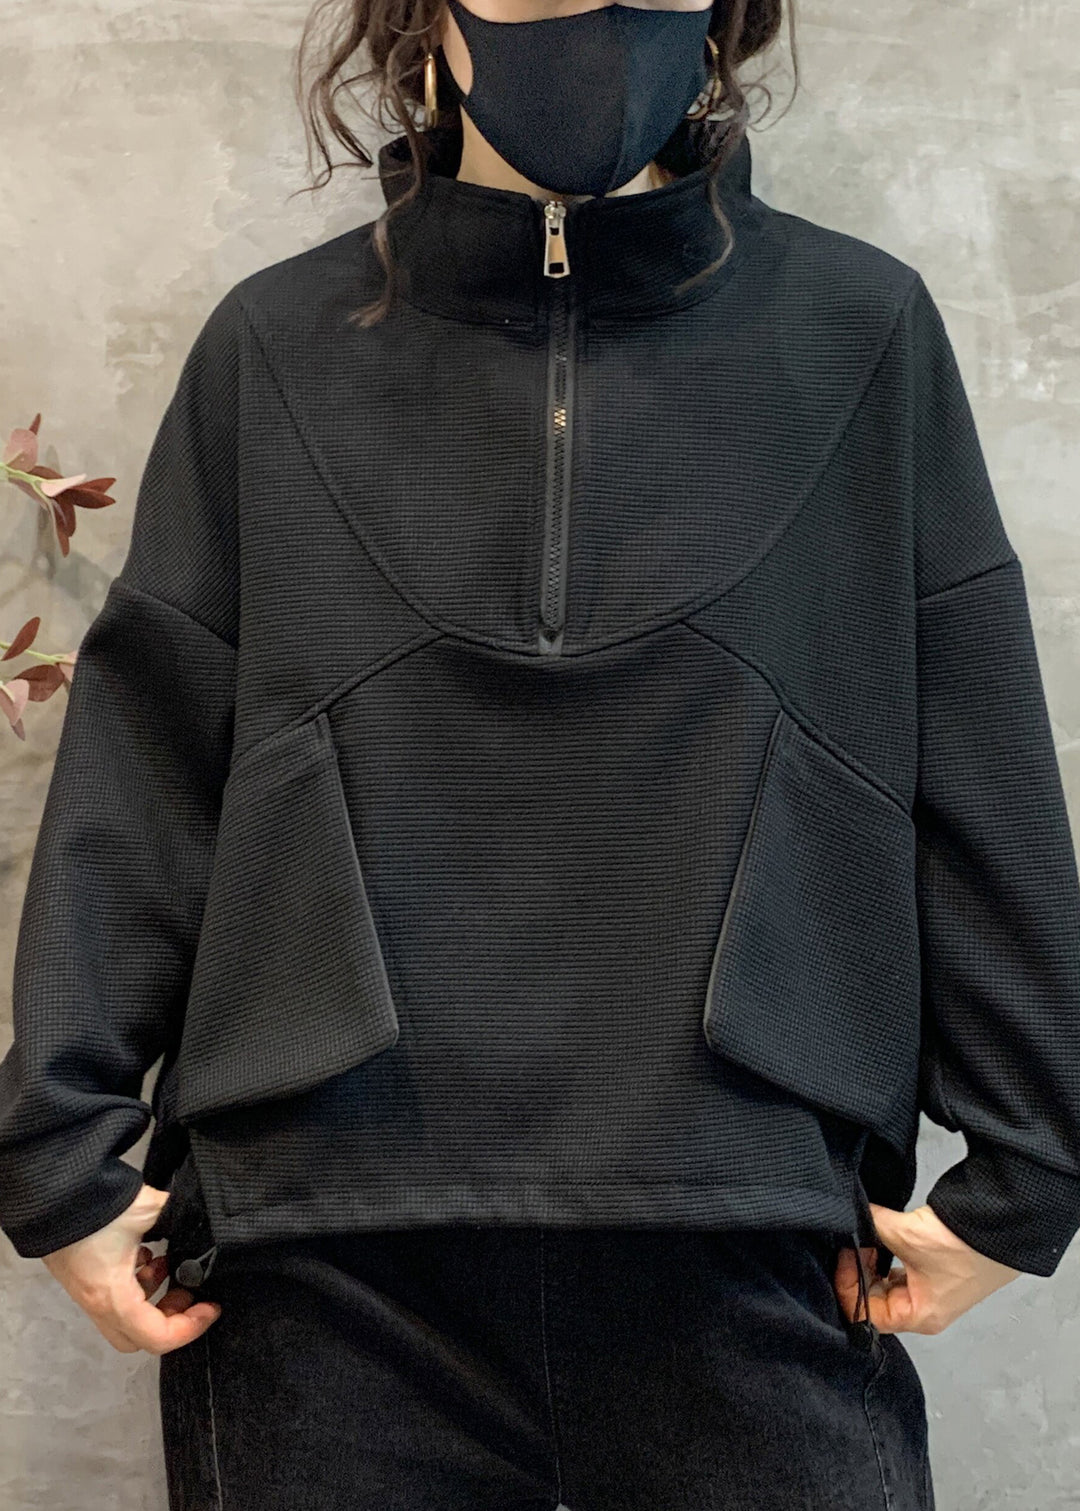 Simple Black Stand Collar Drawstring Pockets Warm Fleece Top Fall